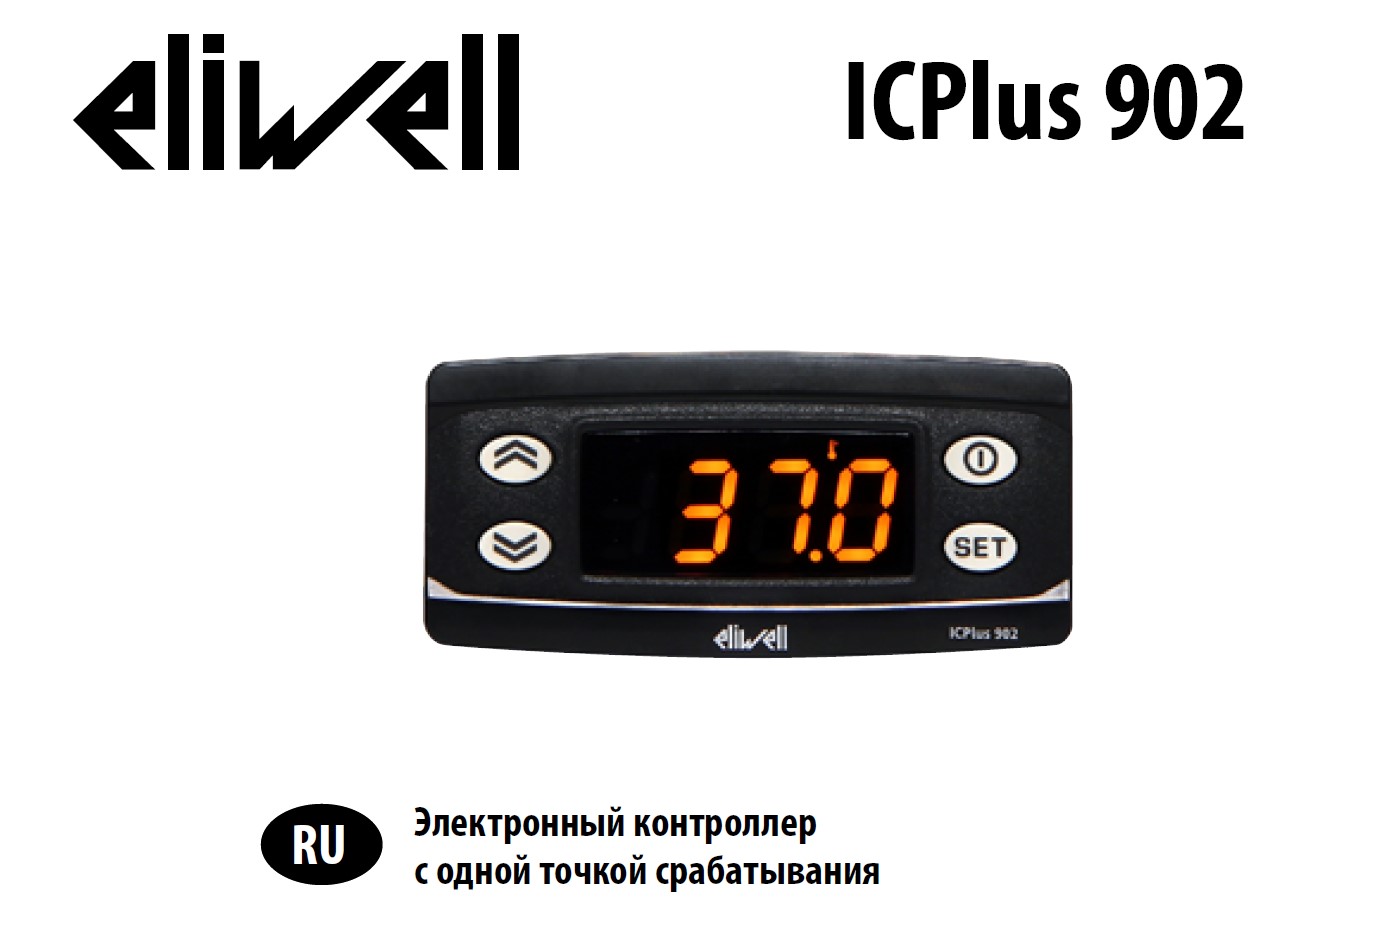 Контроллер Eliwell ICPlus 902 (инструкция по эксплуатации)